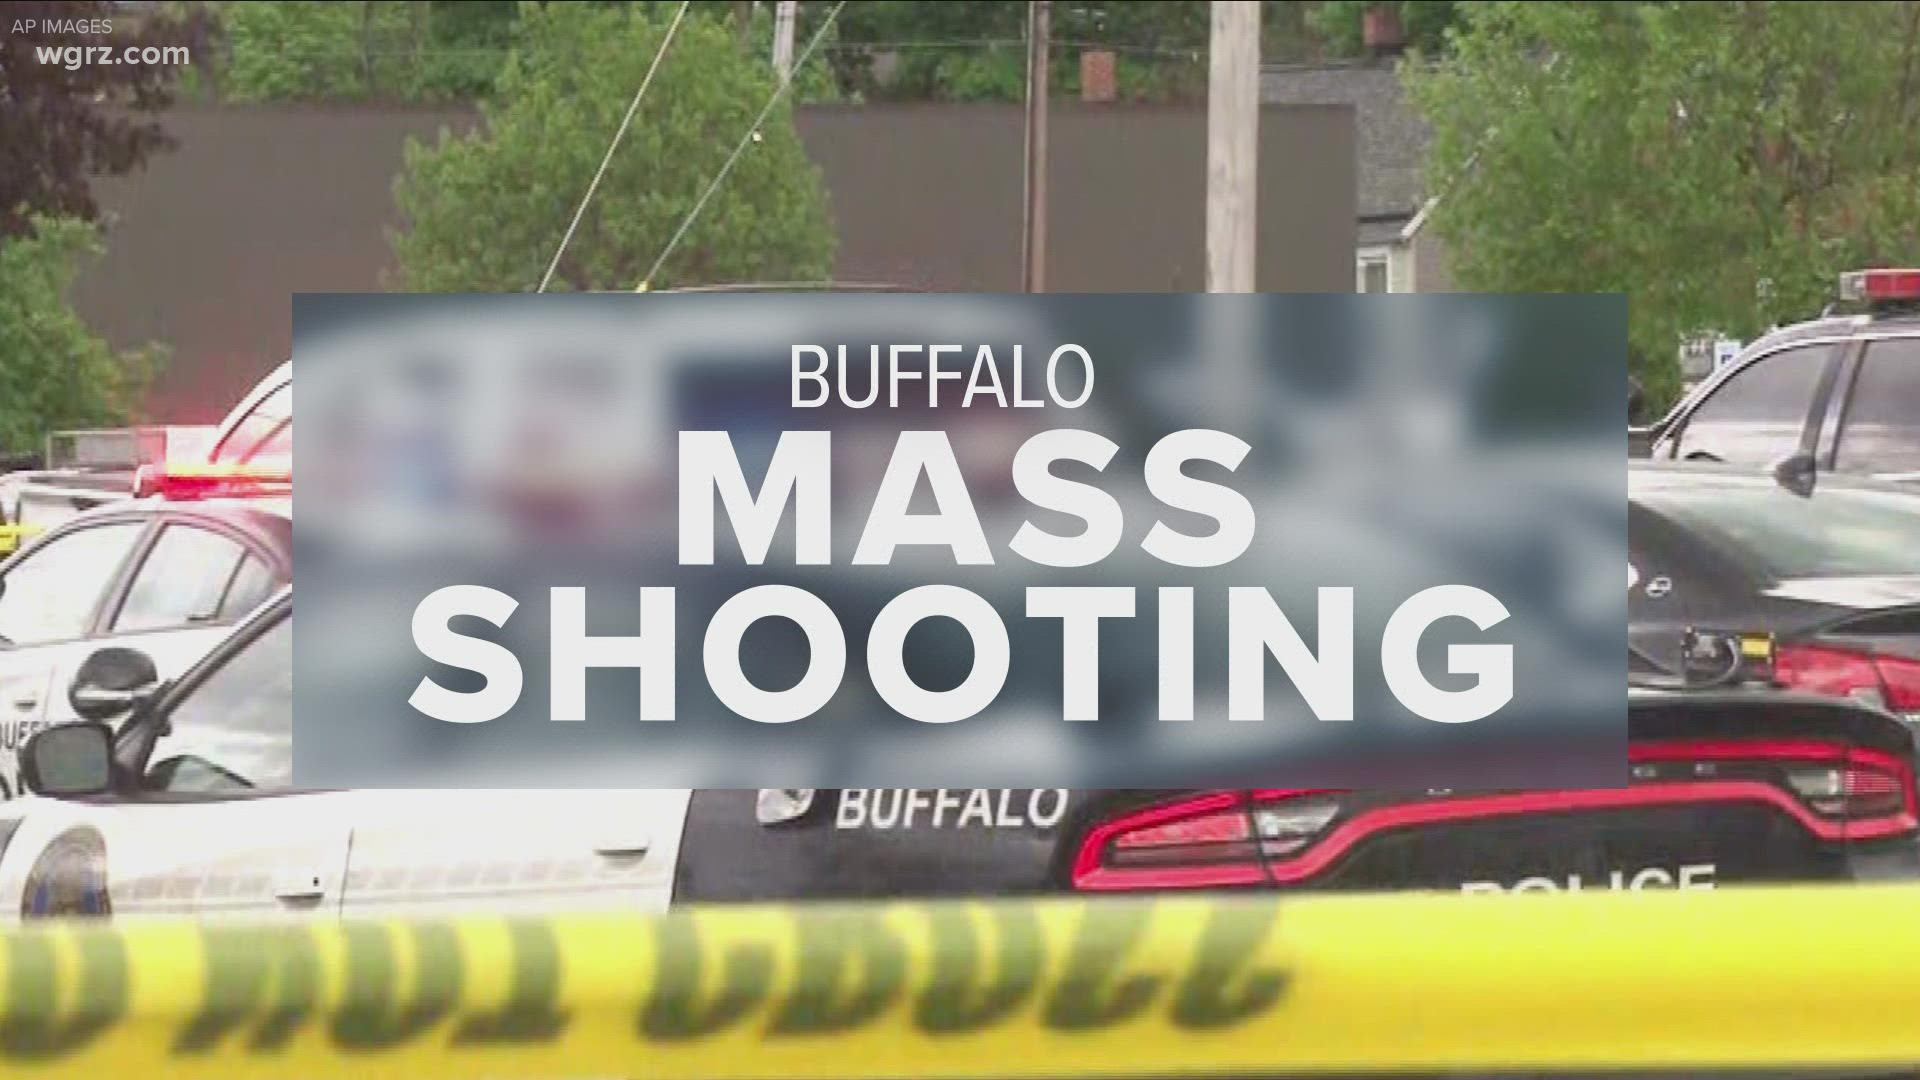 Channel 2 News update on community healing following mass shooting in Buffalo.